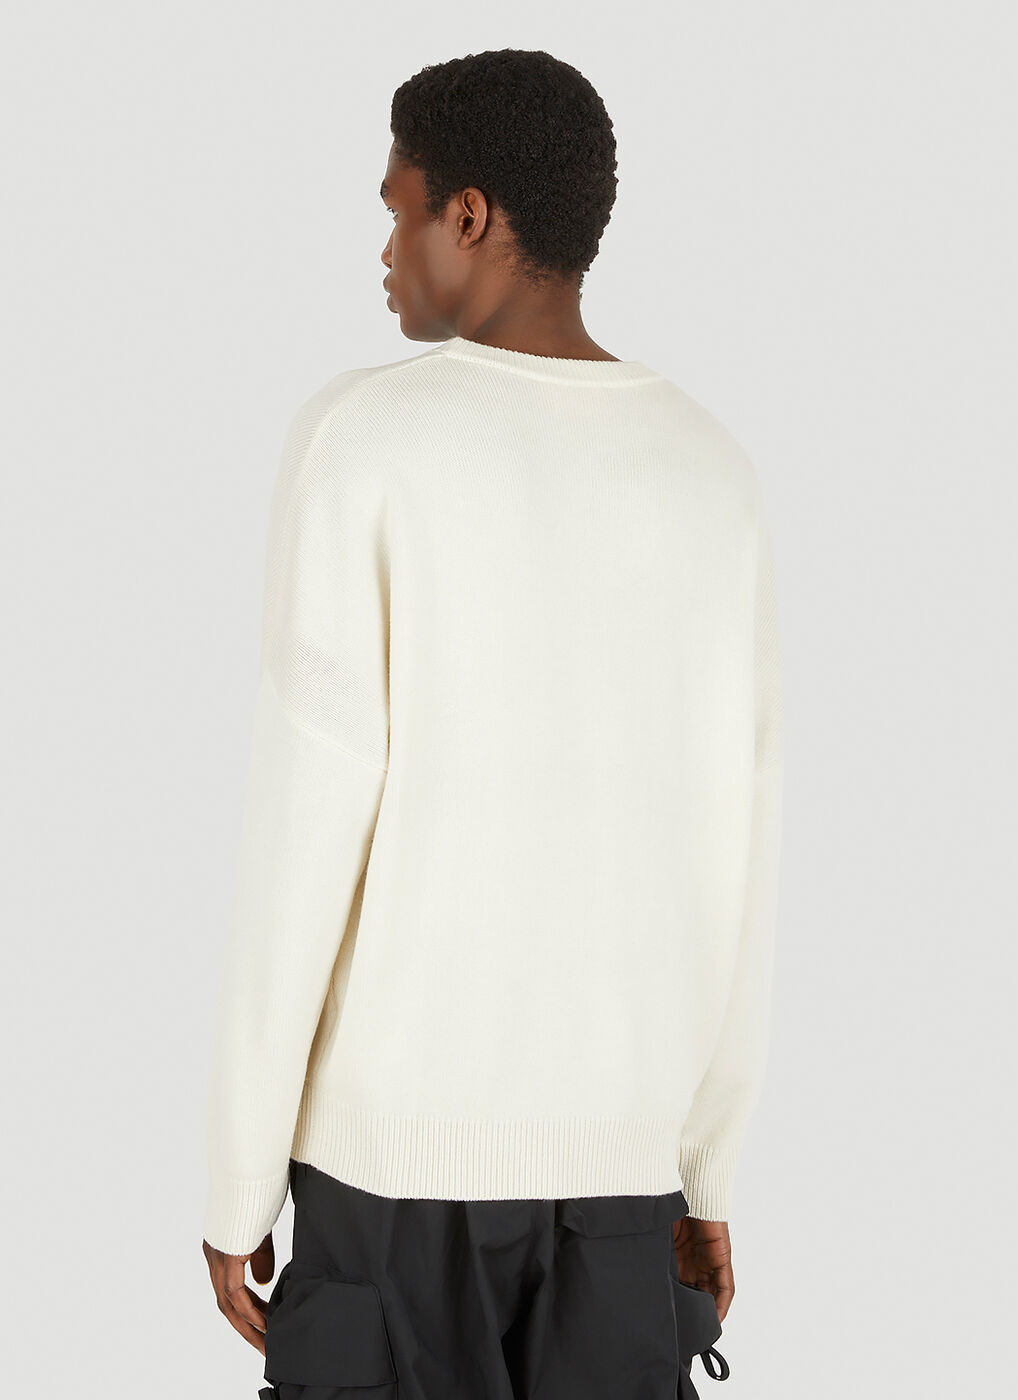 Selfie Crewneck Sweater in White